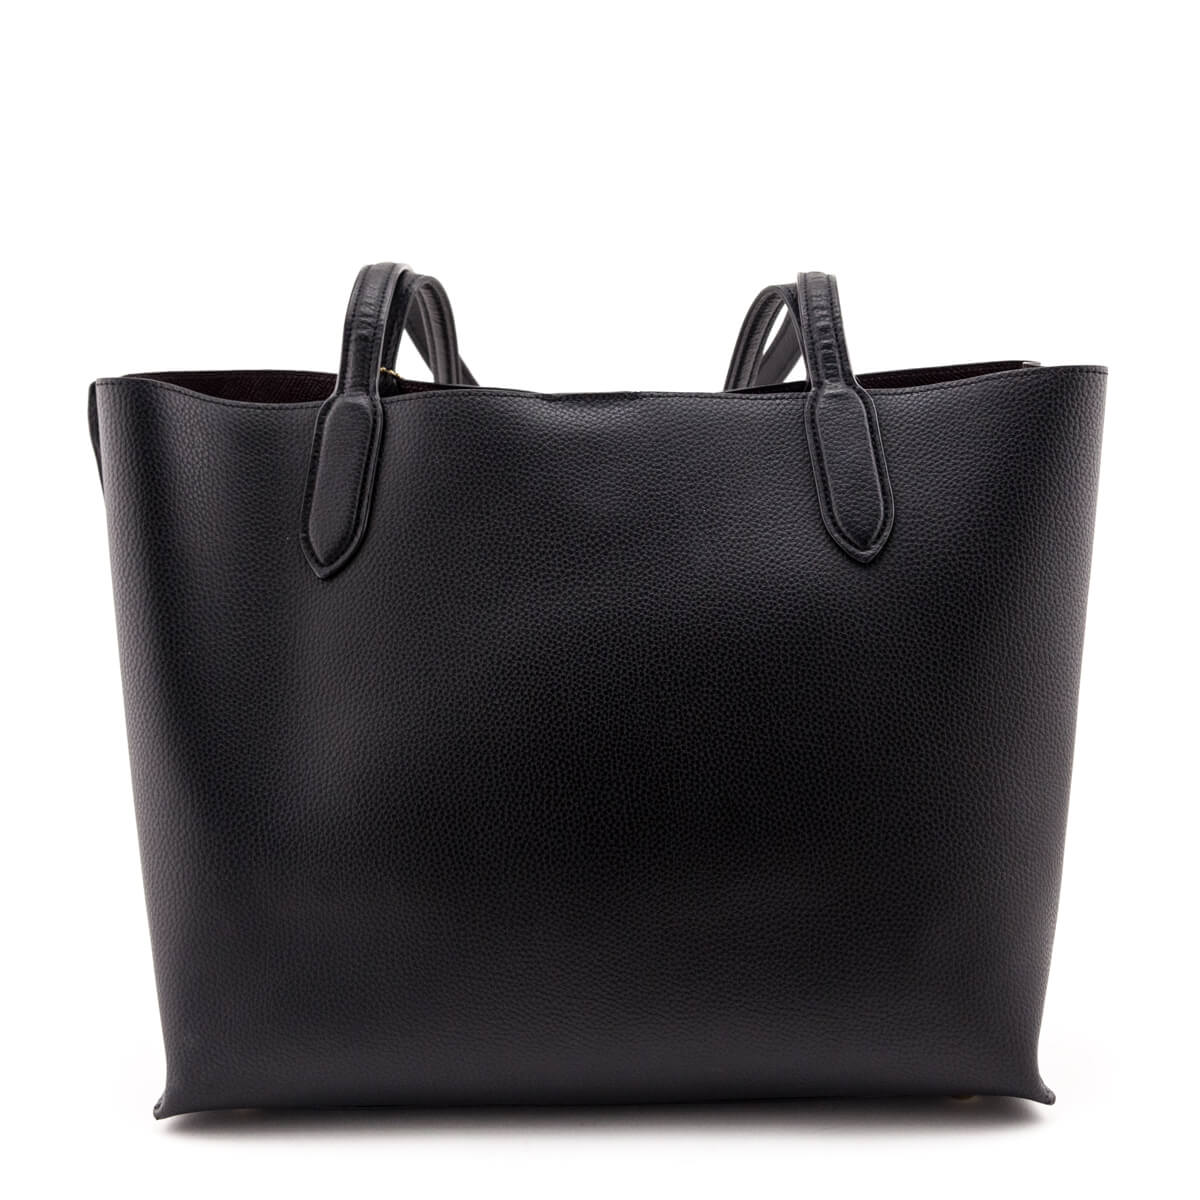 COACH black tote bag